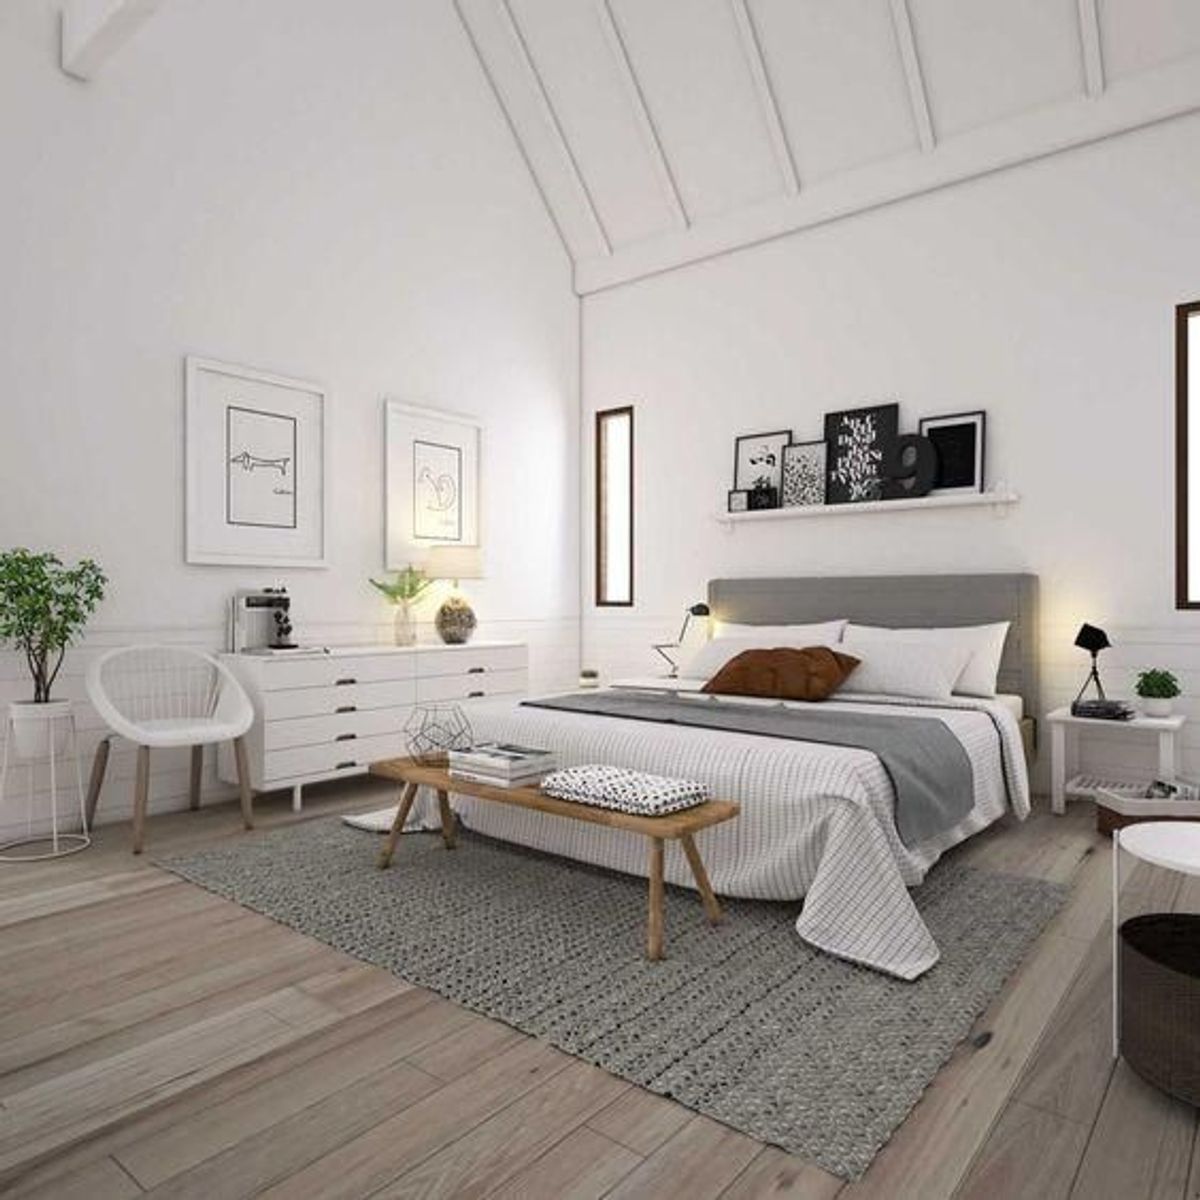 Nordic style bedroom